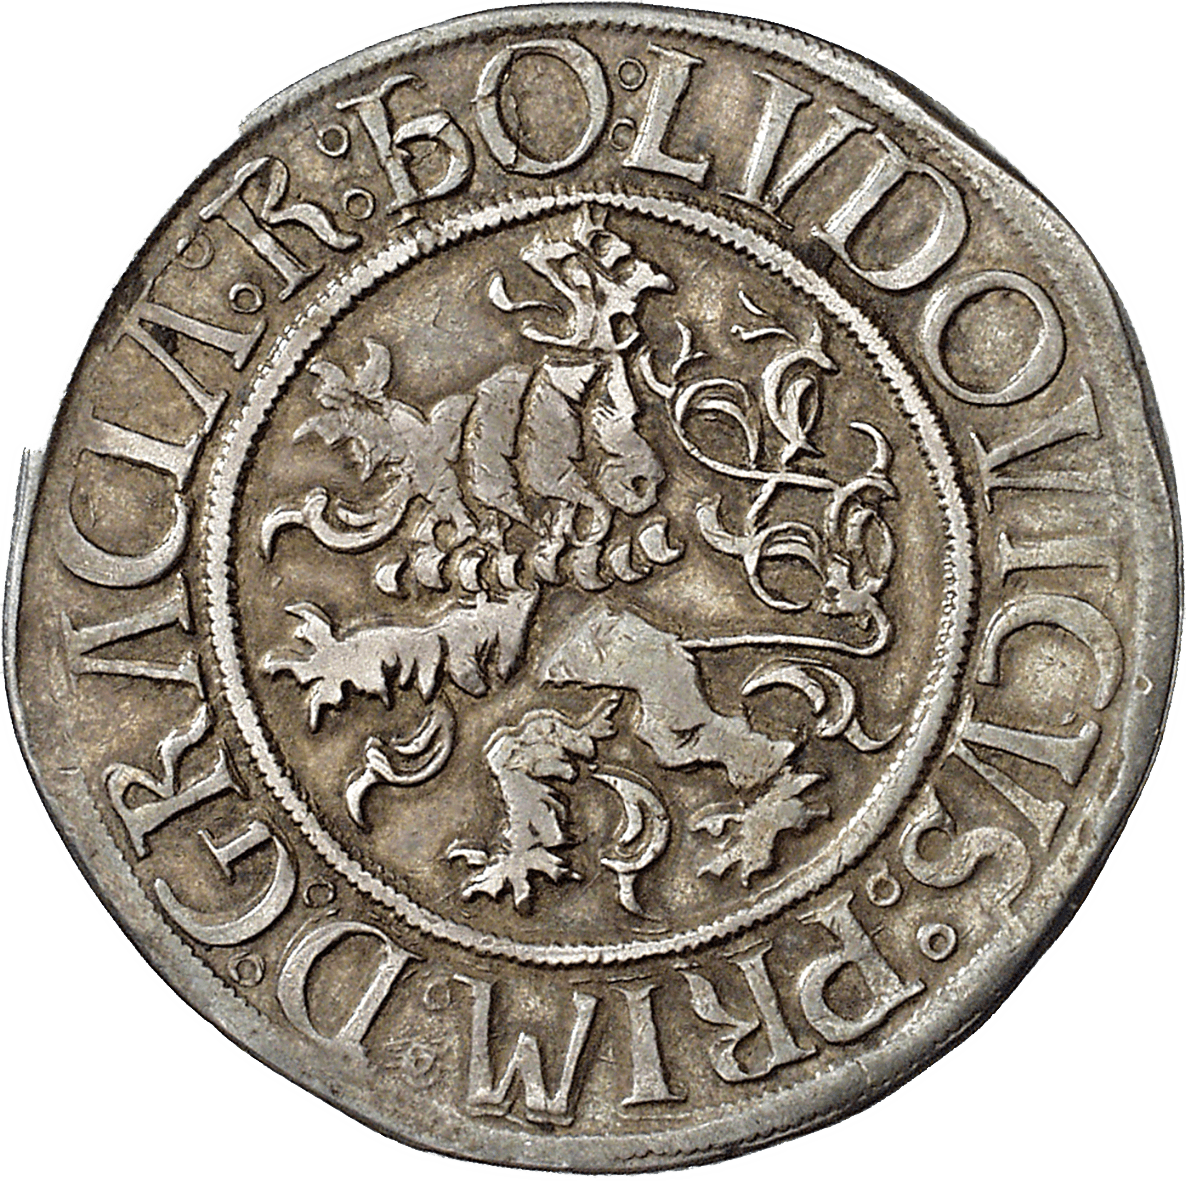 Holy Roman Empire, Kingdom of Bohemia, County of Schlick, Stephan, Guldengroschen 1519 (obverse)